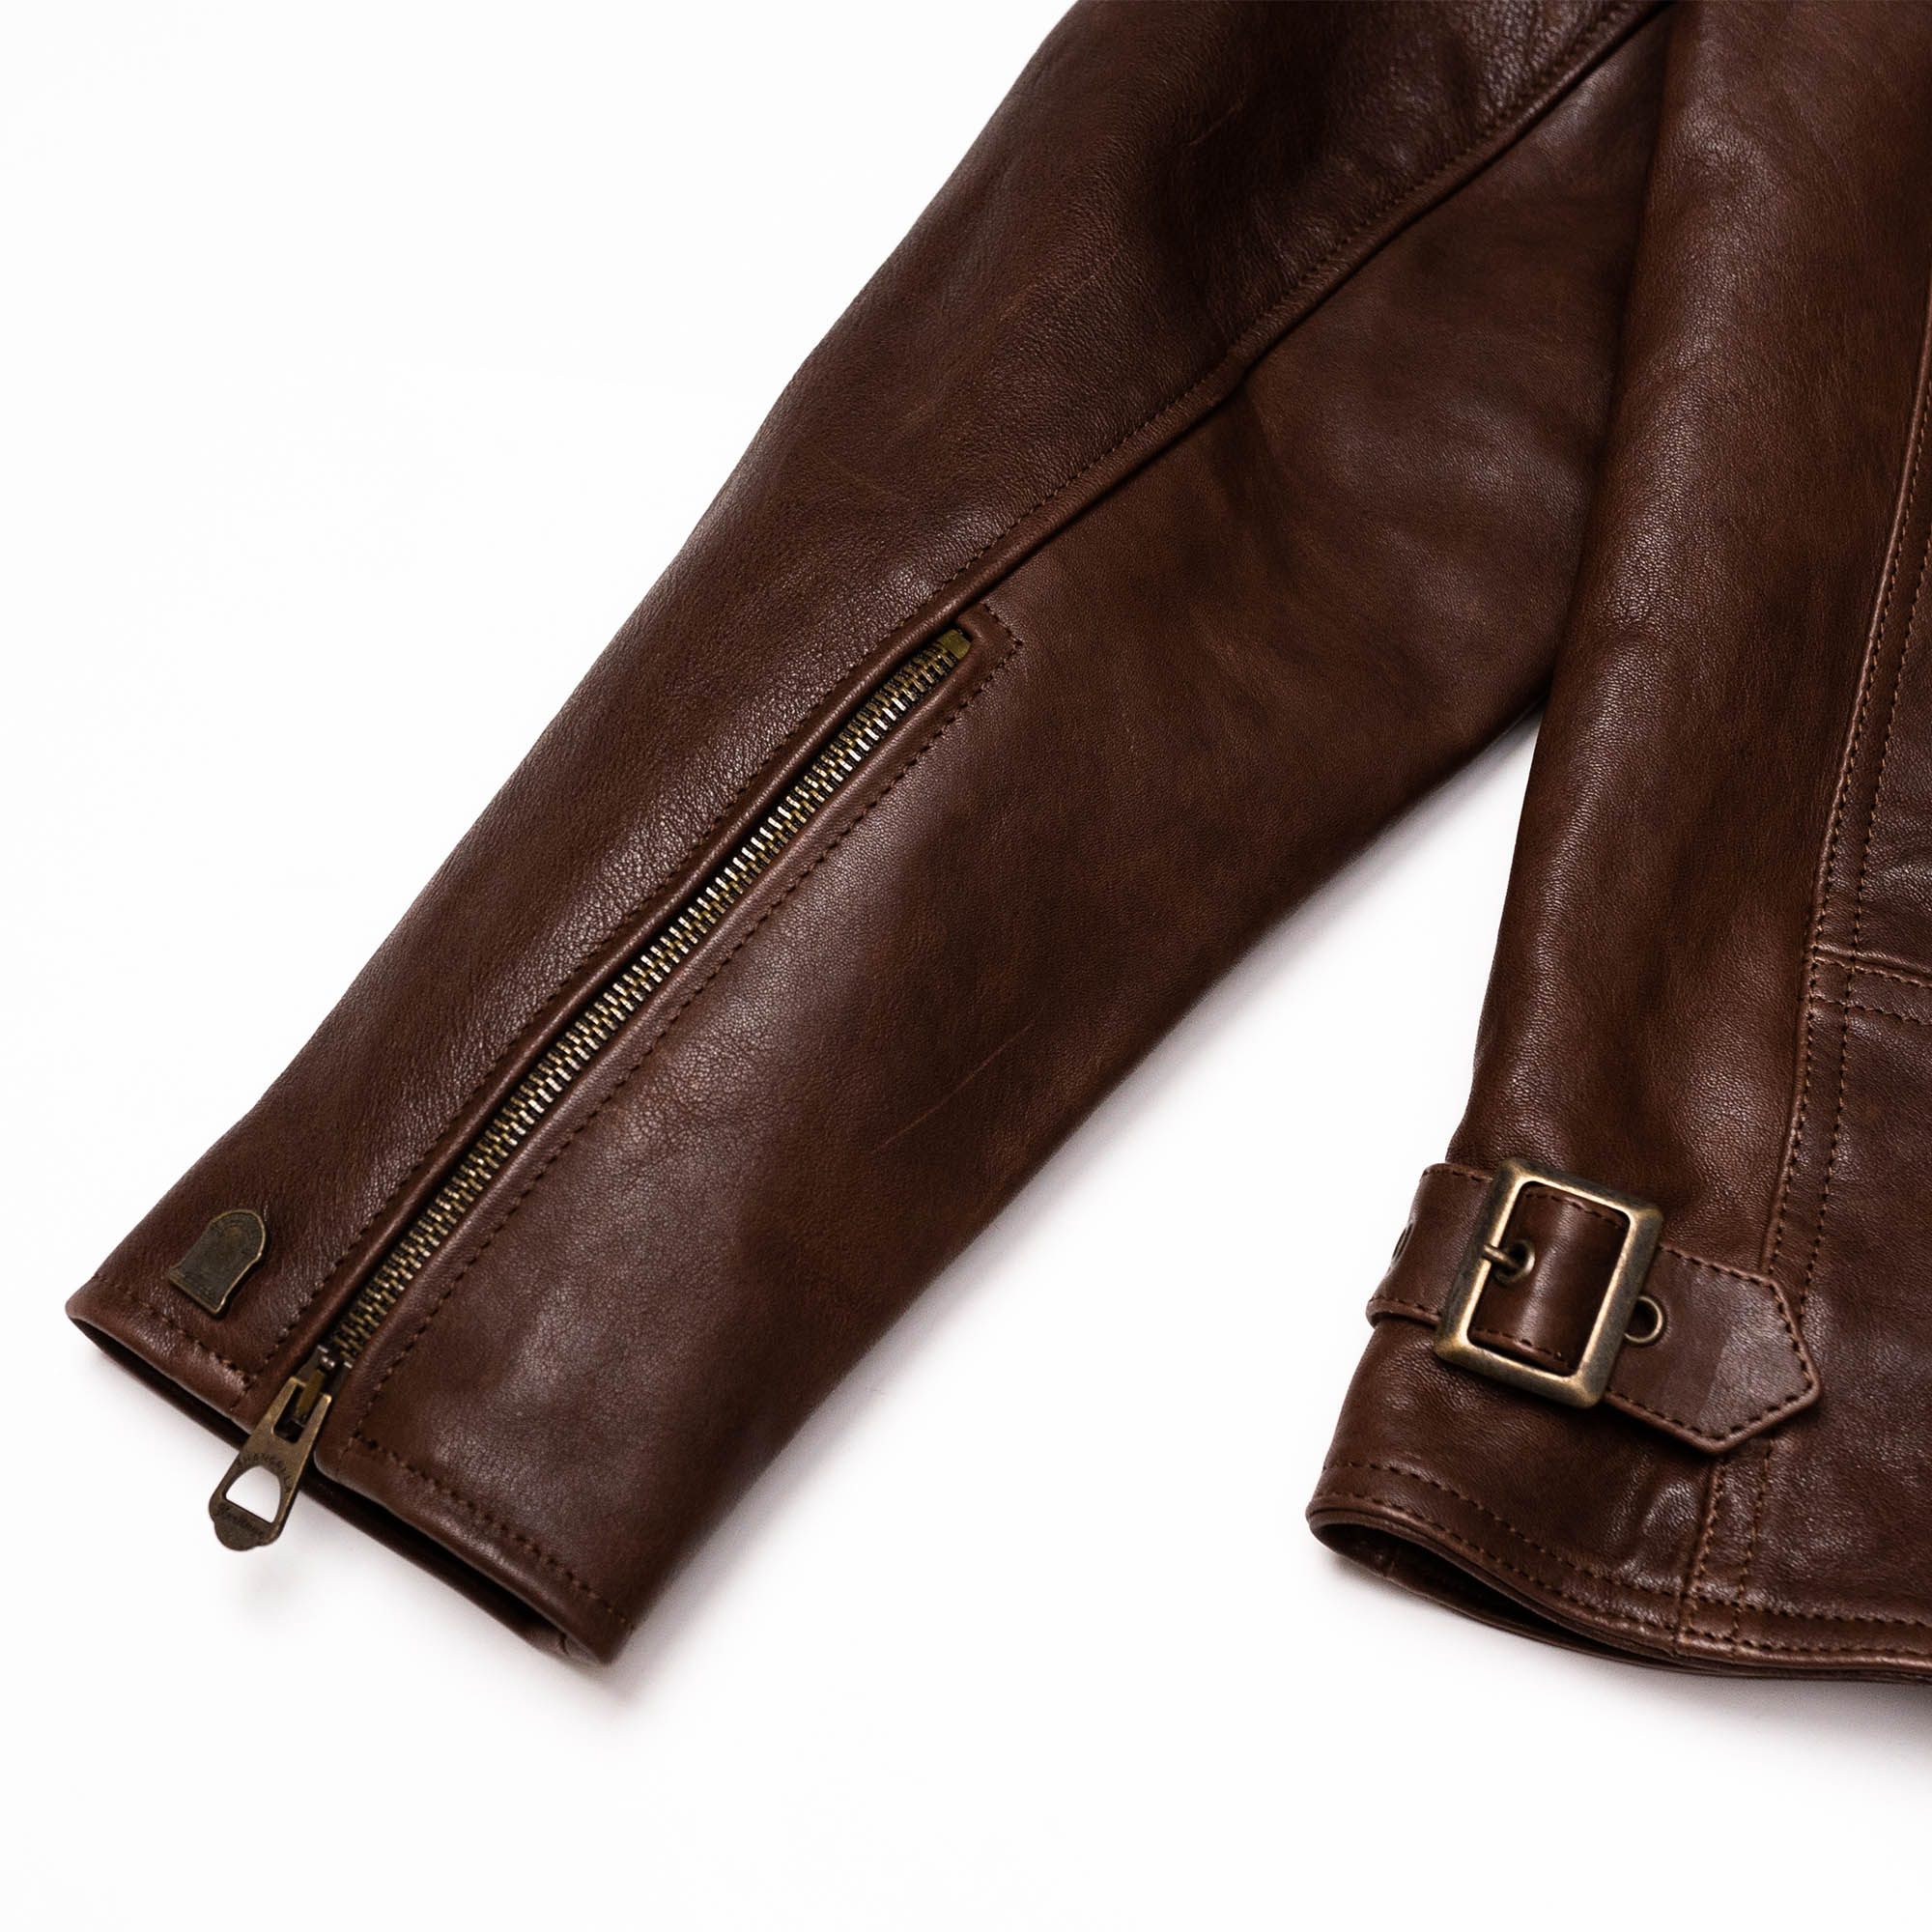 “Café Racer” Brown Leather Jacket